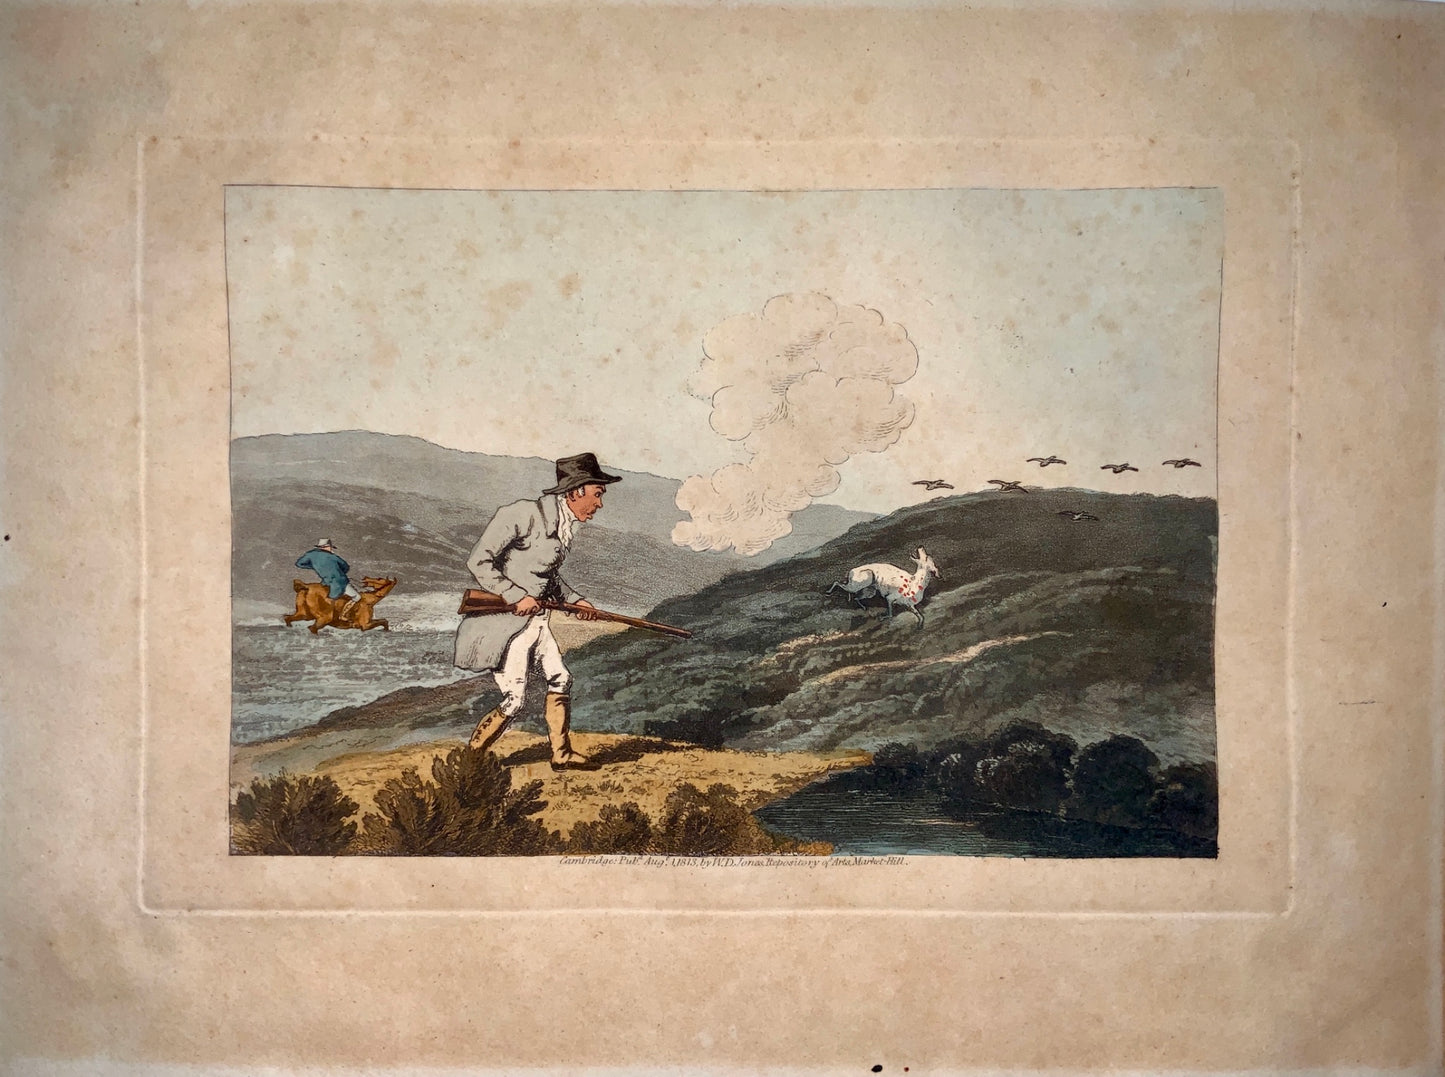 Woodman (Richard) [Eight representations of shooting] W.D. Jones 1813 - Sport and Humour